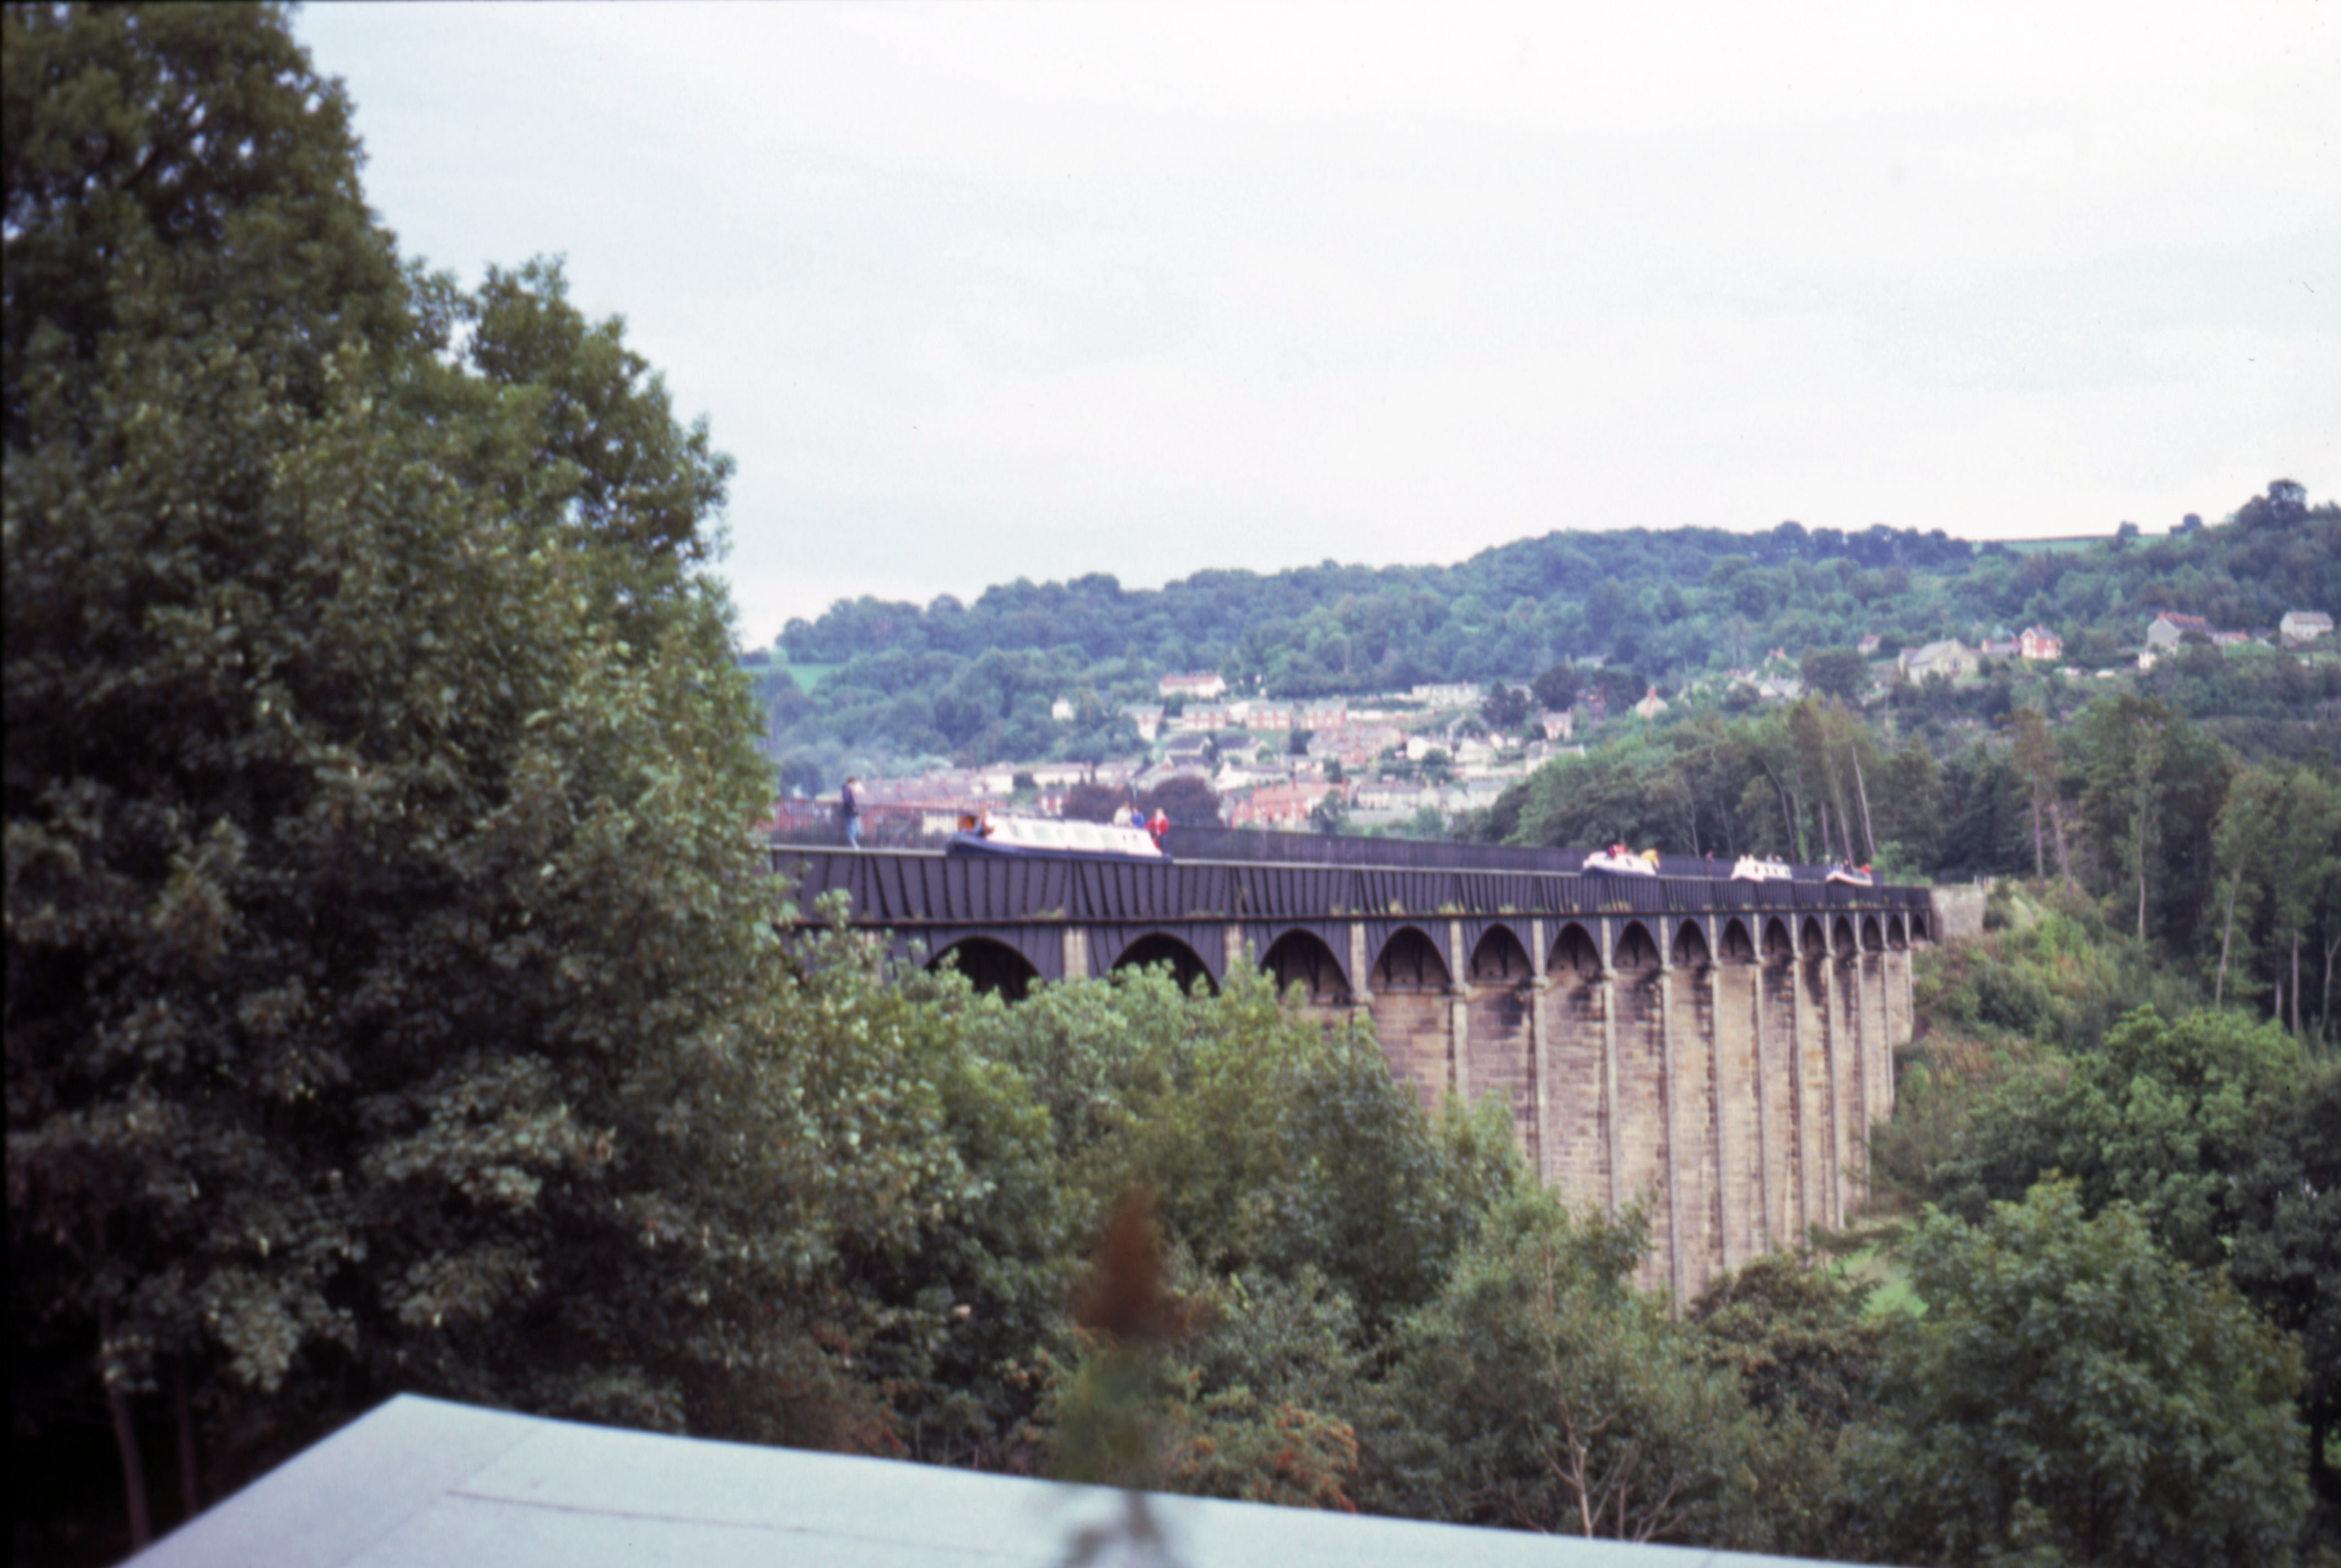 8408327 Sep 1984 Looking back on the Pontcysyllte Aqueduct.